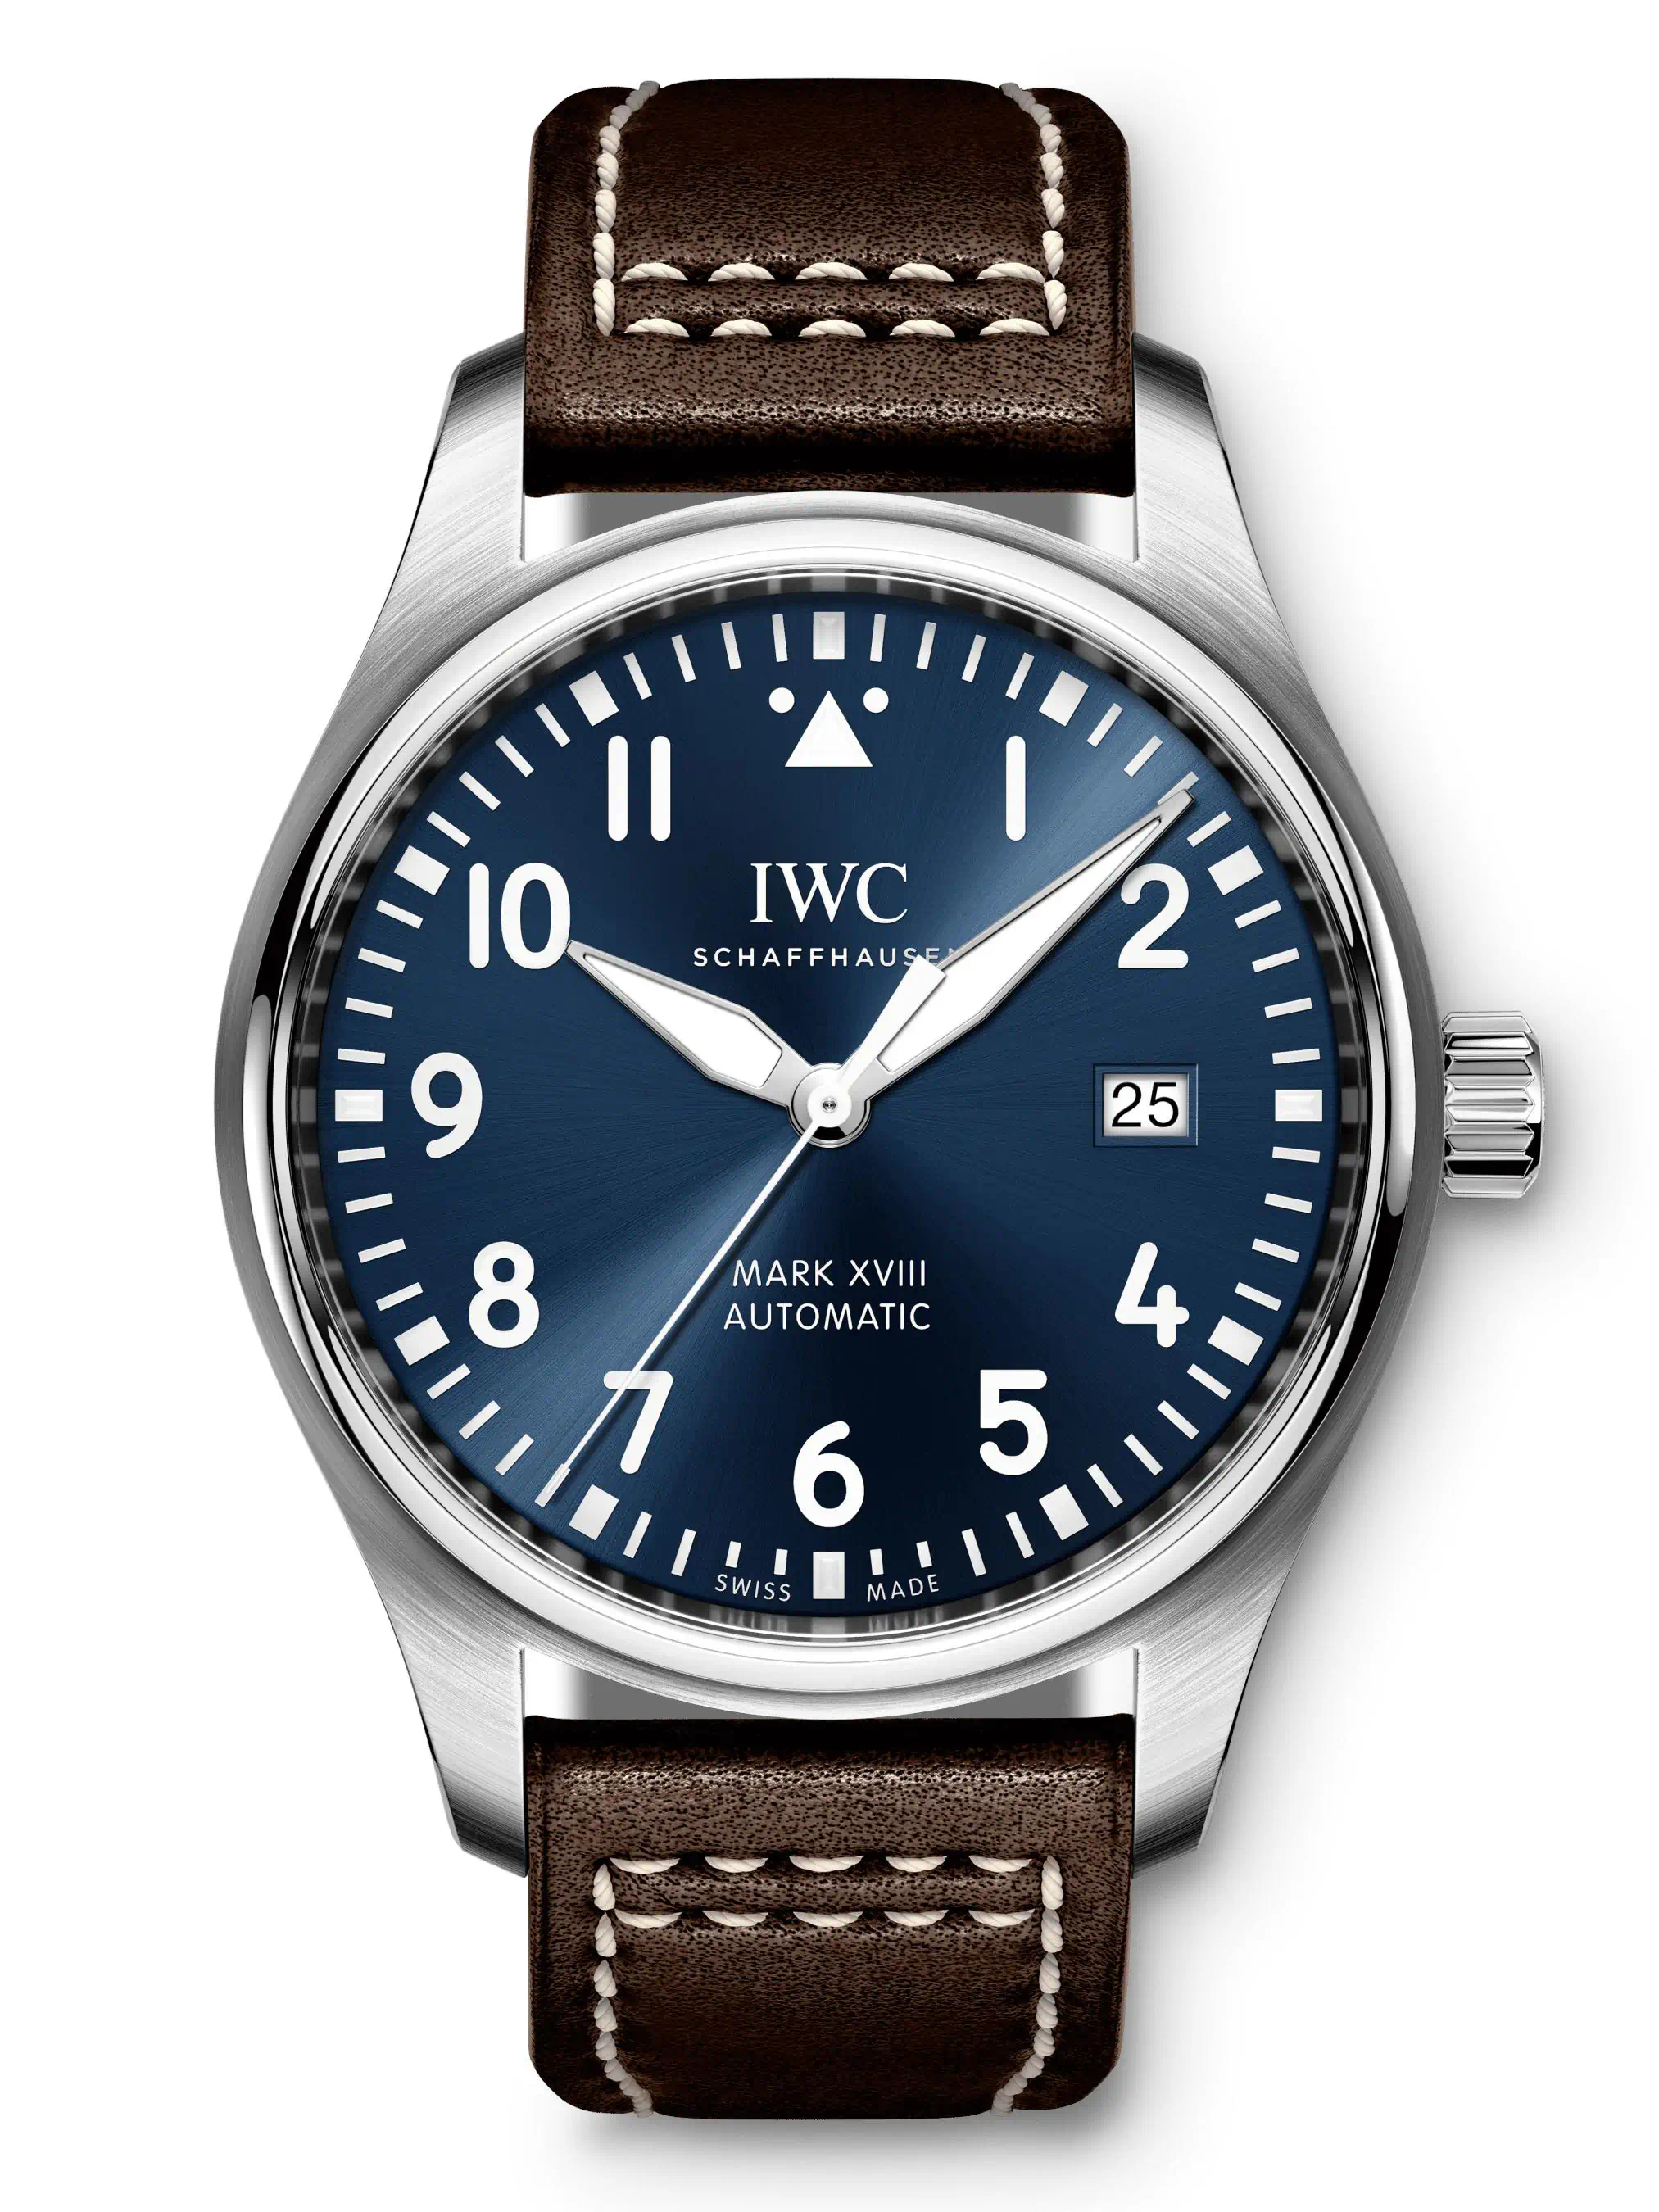 Часы интернационал. Швейцарские часы IWC Schaffhausen. Часы IWC Schaffhausen iw377714. Часы IWC big Pilot. Наручные часы IWC iw391008.